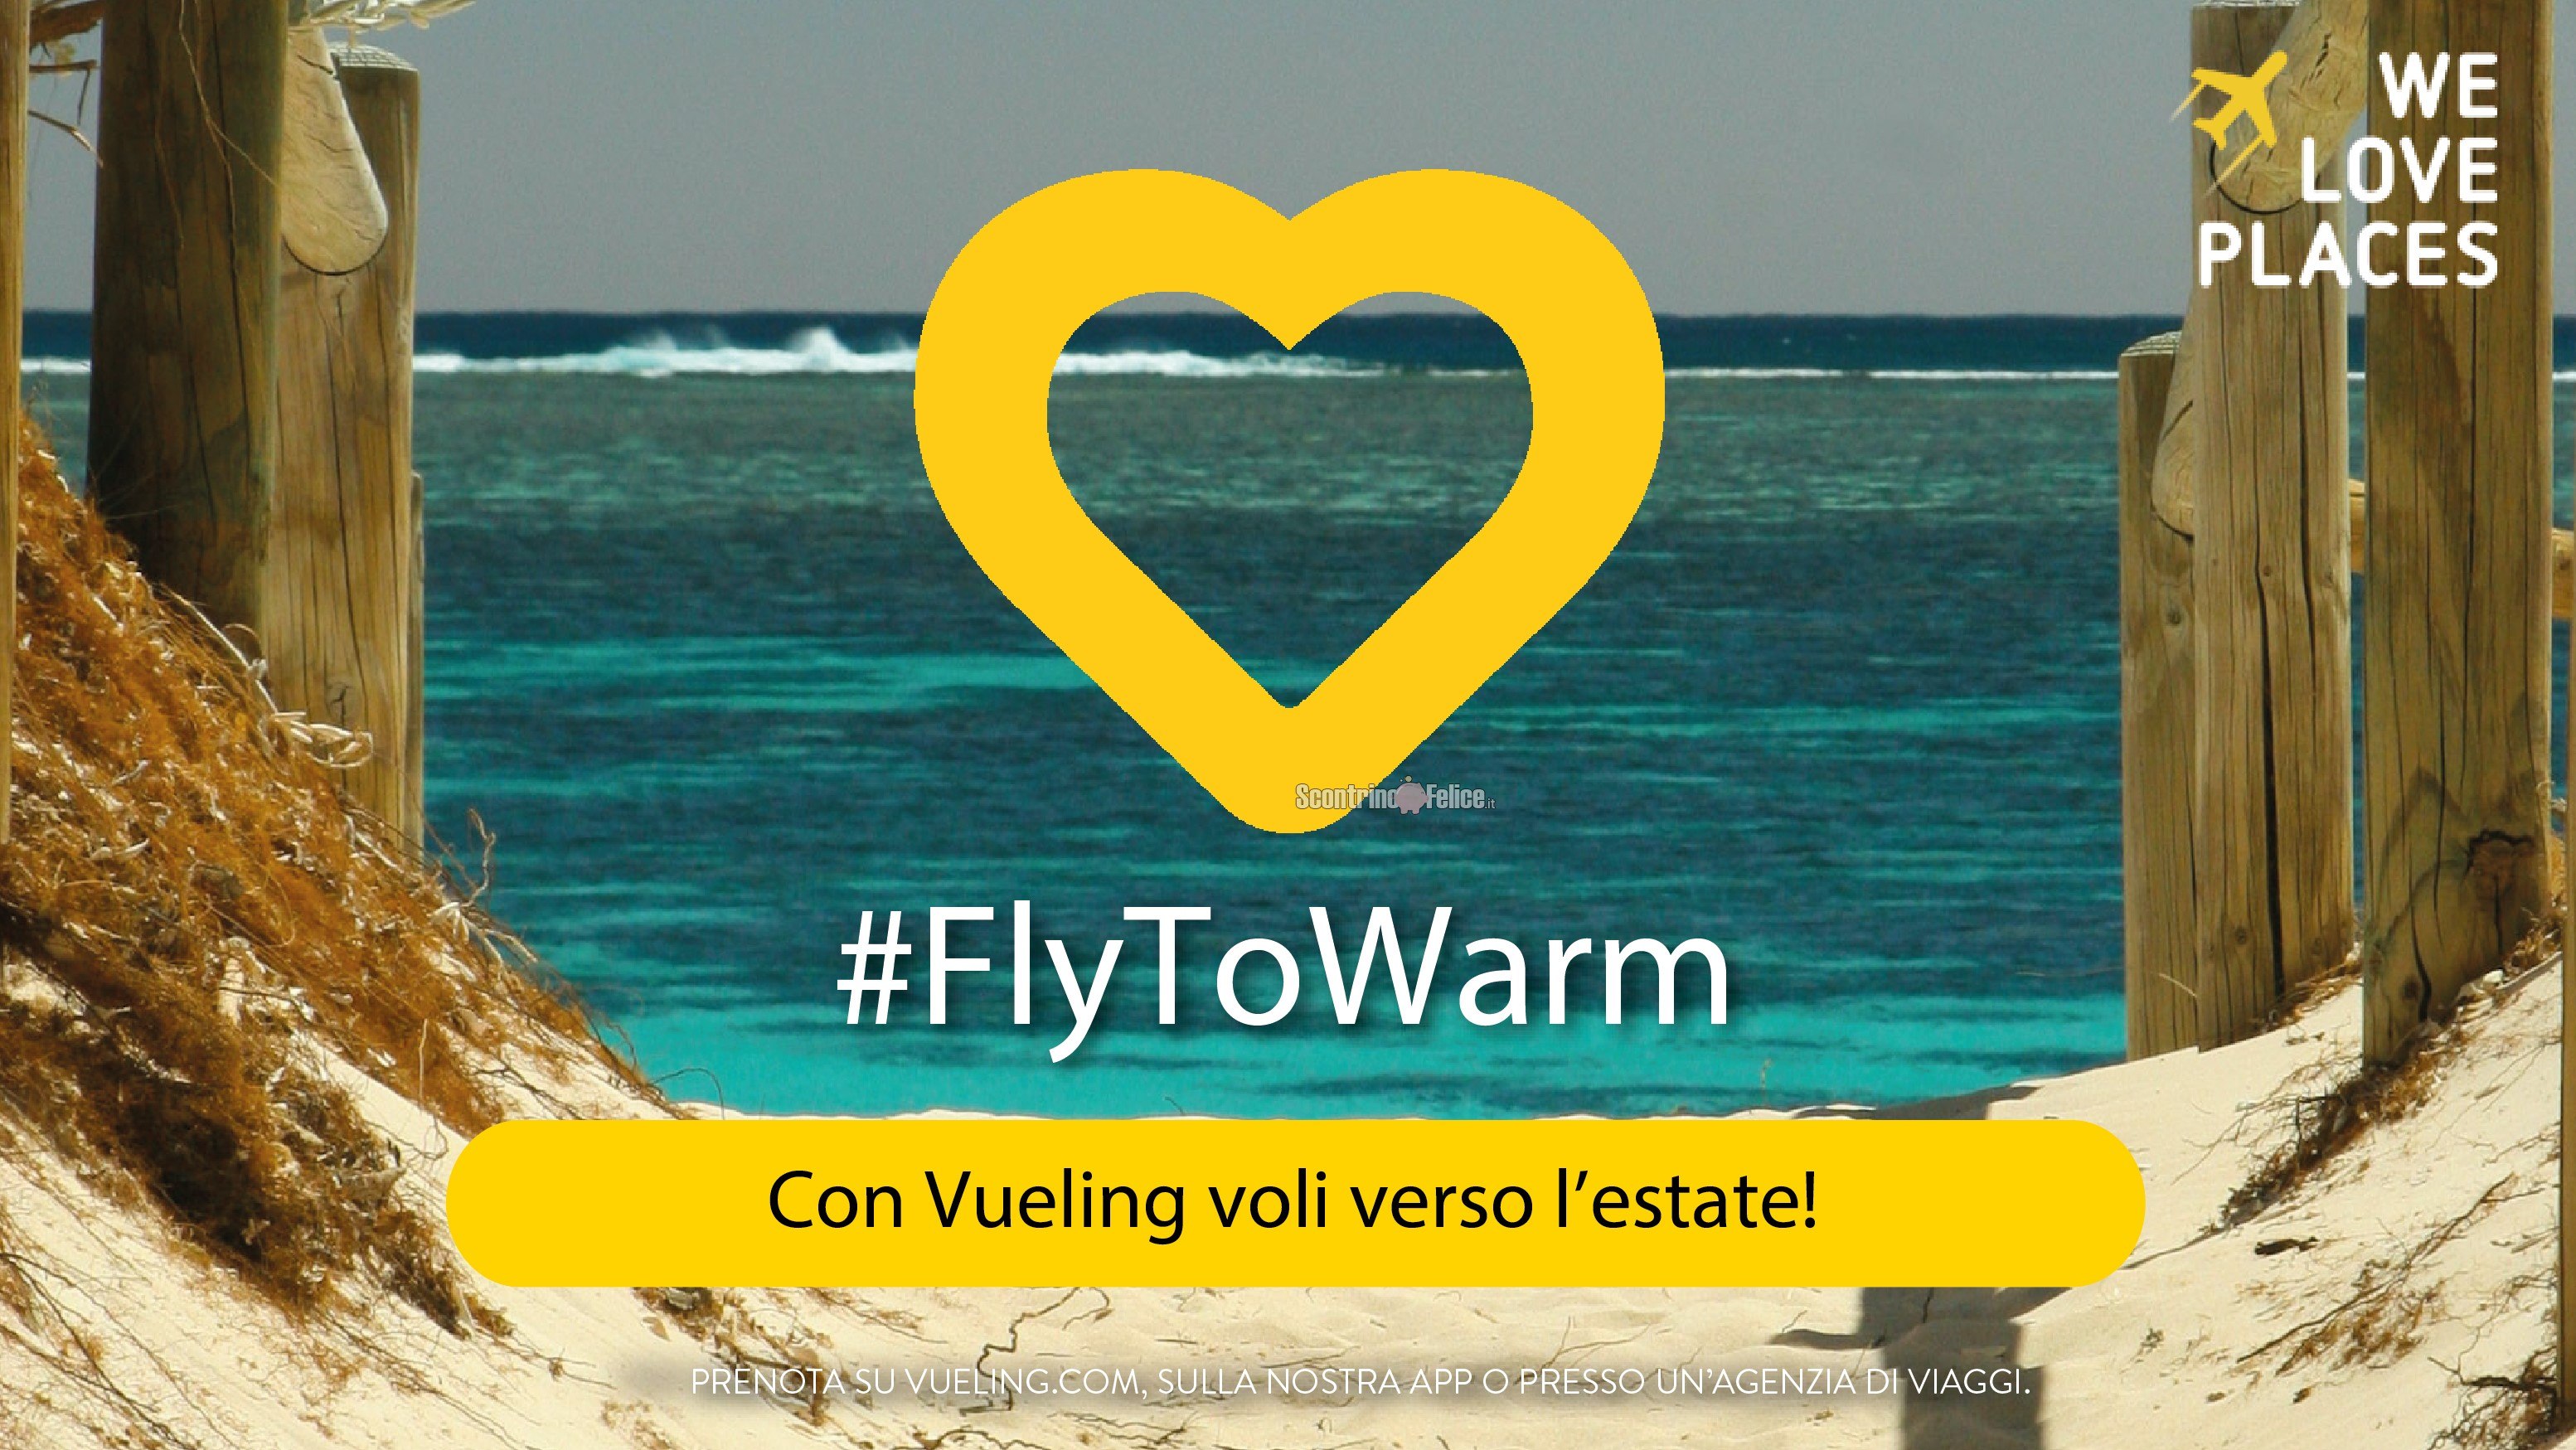 Concorso gratuito Vueling Fly tor Warm vinci volo per due persone